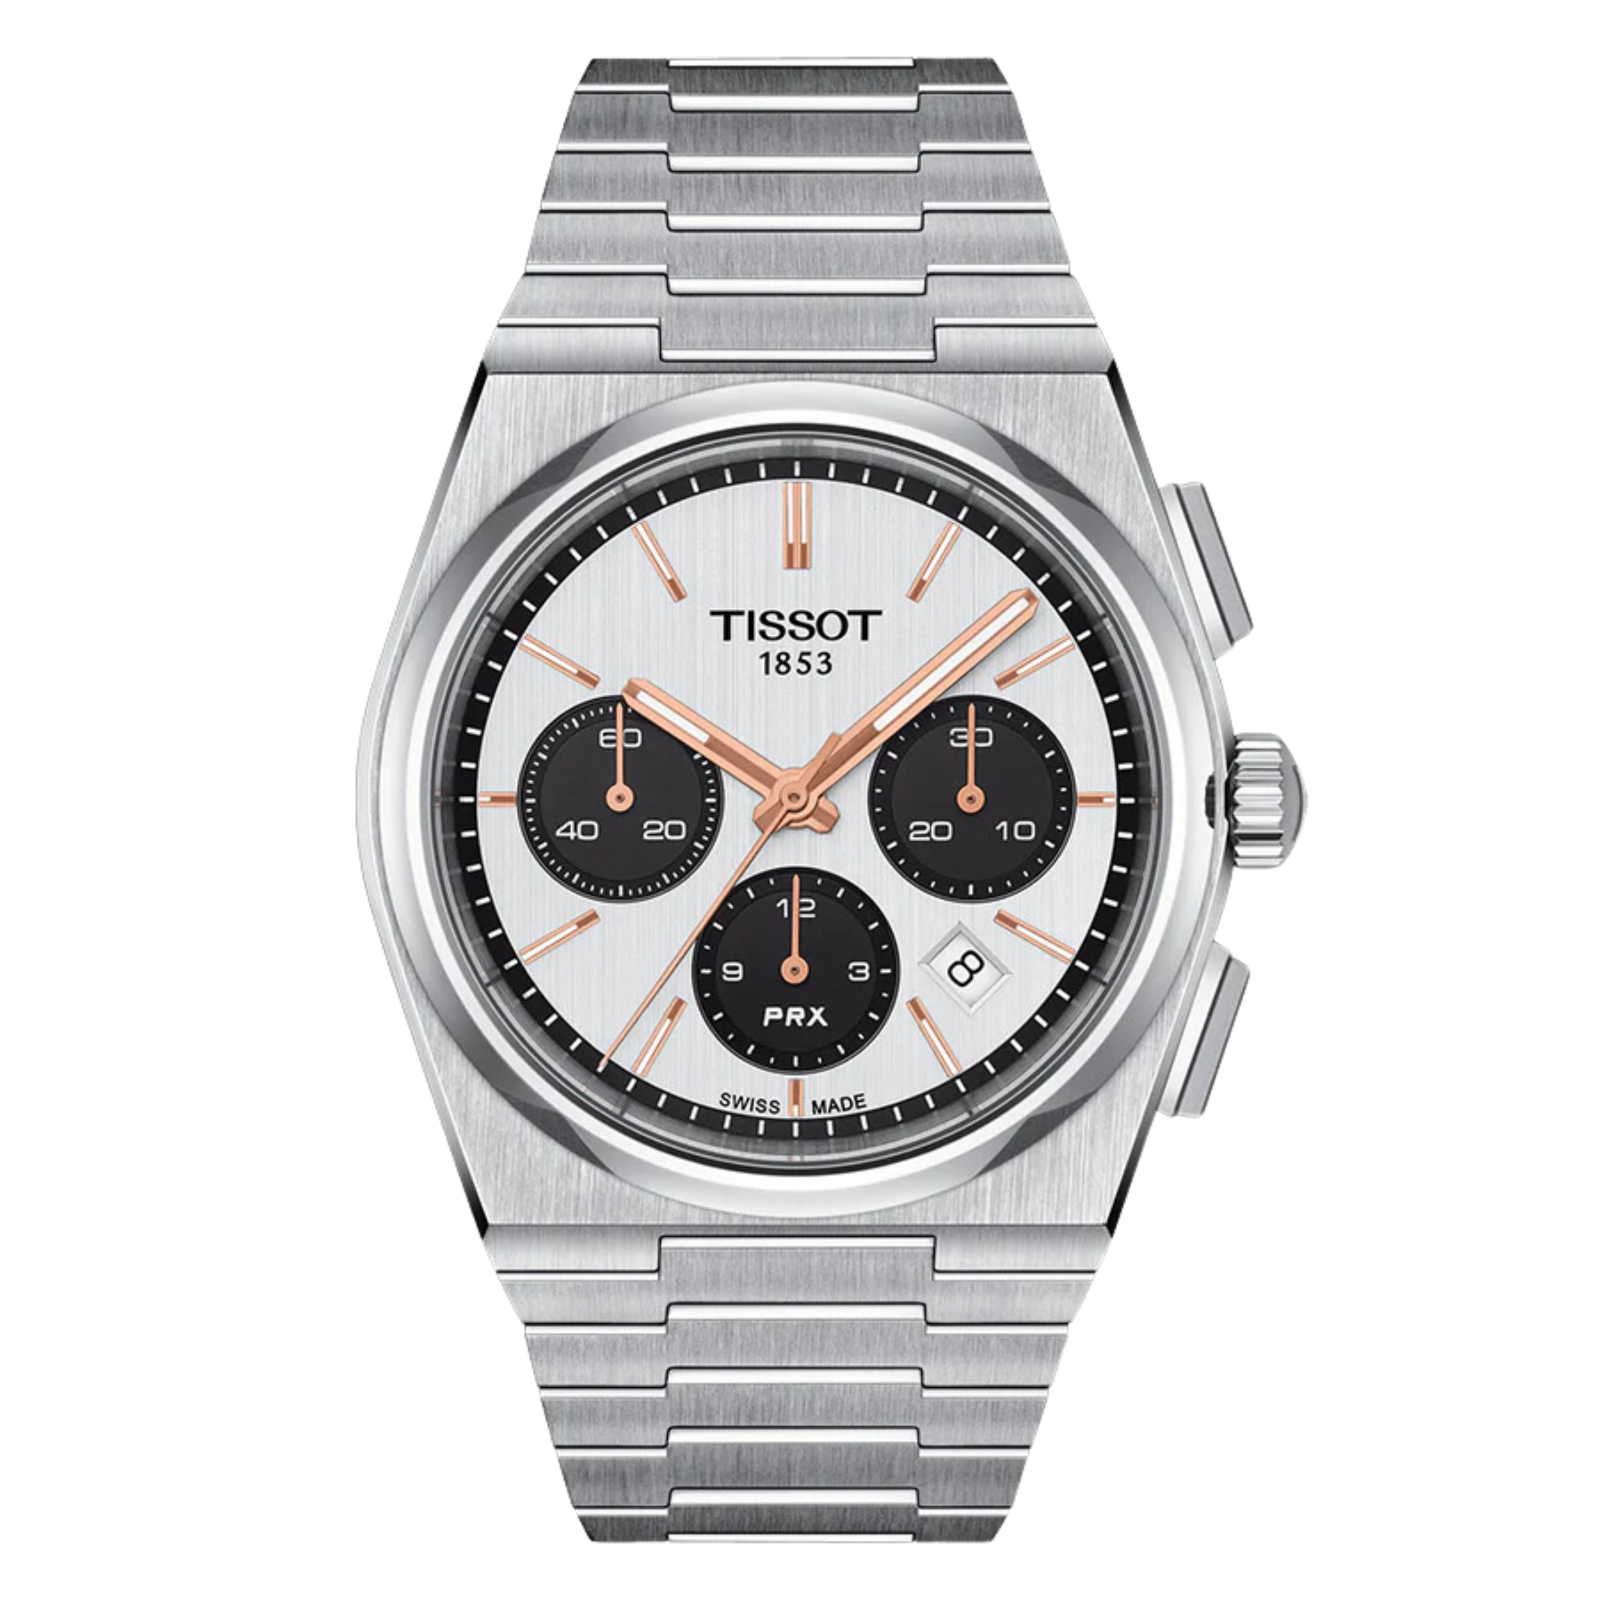 Tissot 1853 PRX Automatic Chronograph T1374271101100 T137.427.11.011.00 White Dial Watch